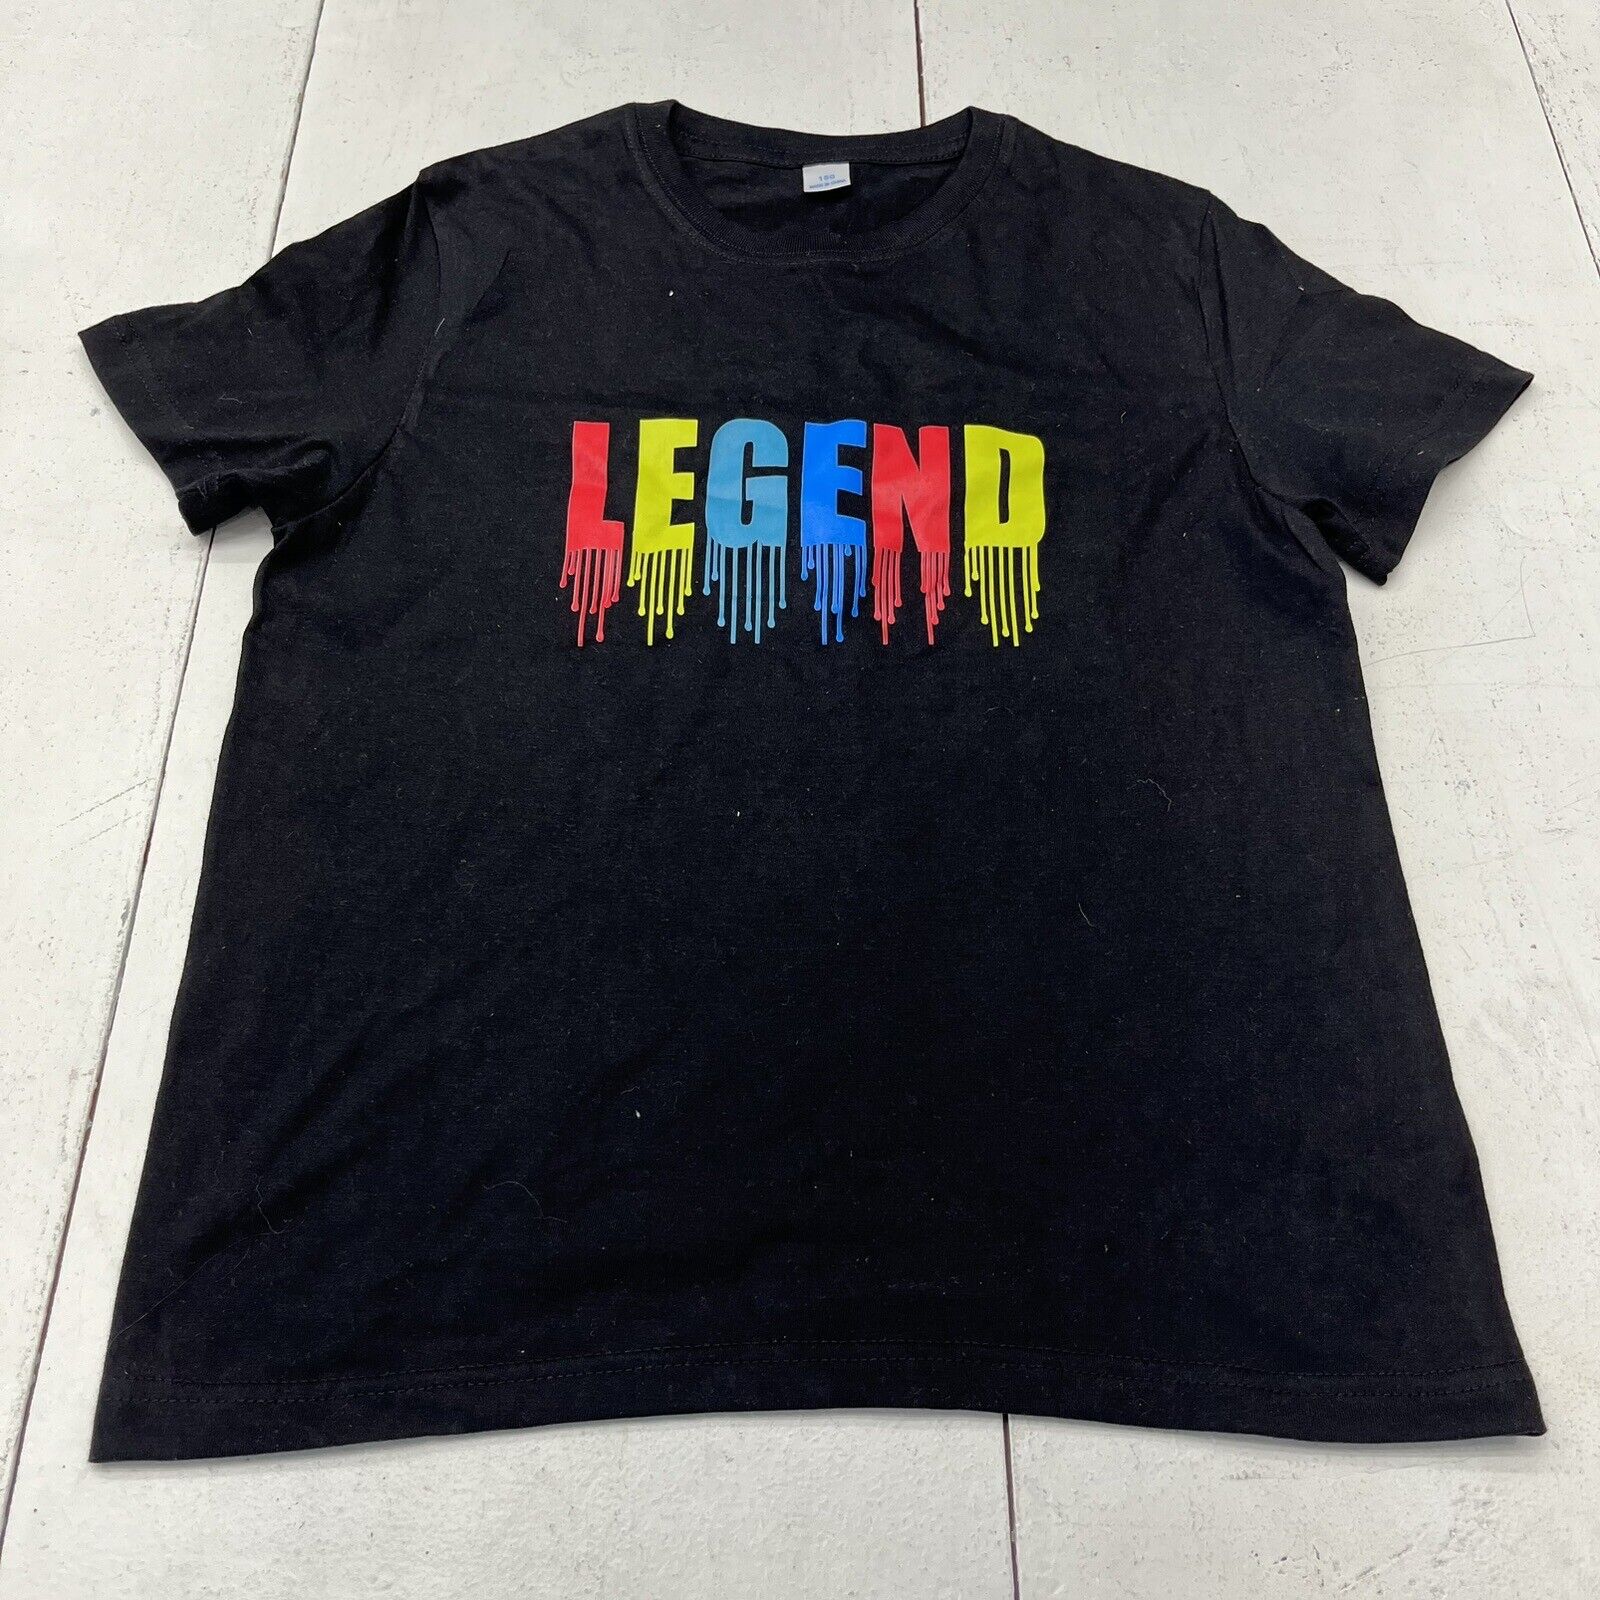 Black Graphic “Legend” Printed Short Sleeve T-Shirt Boys Size 11 NEW